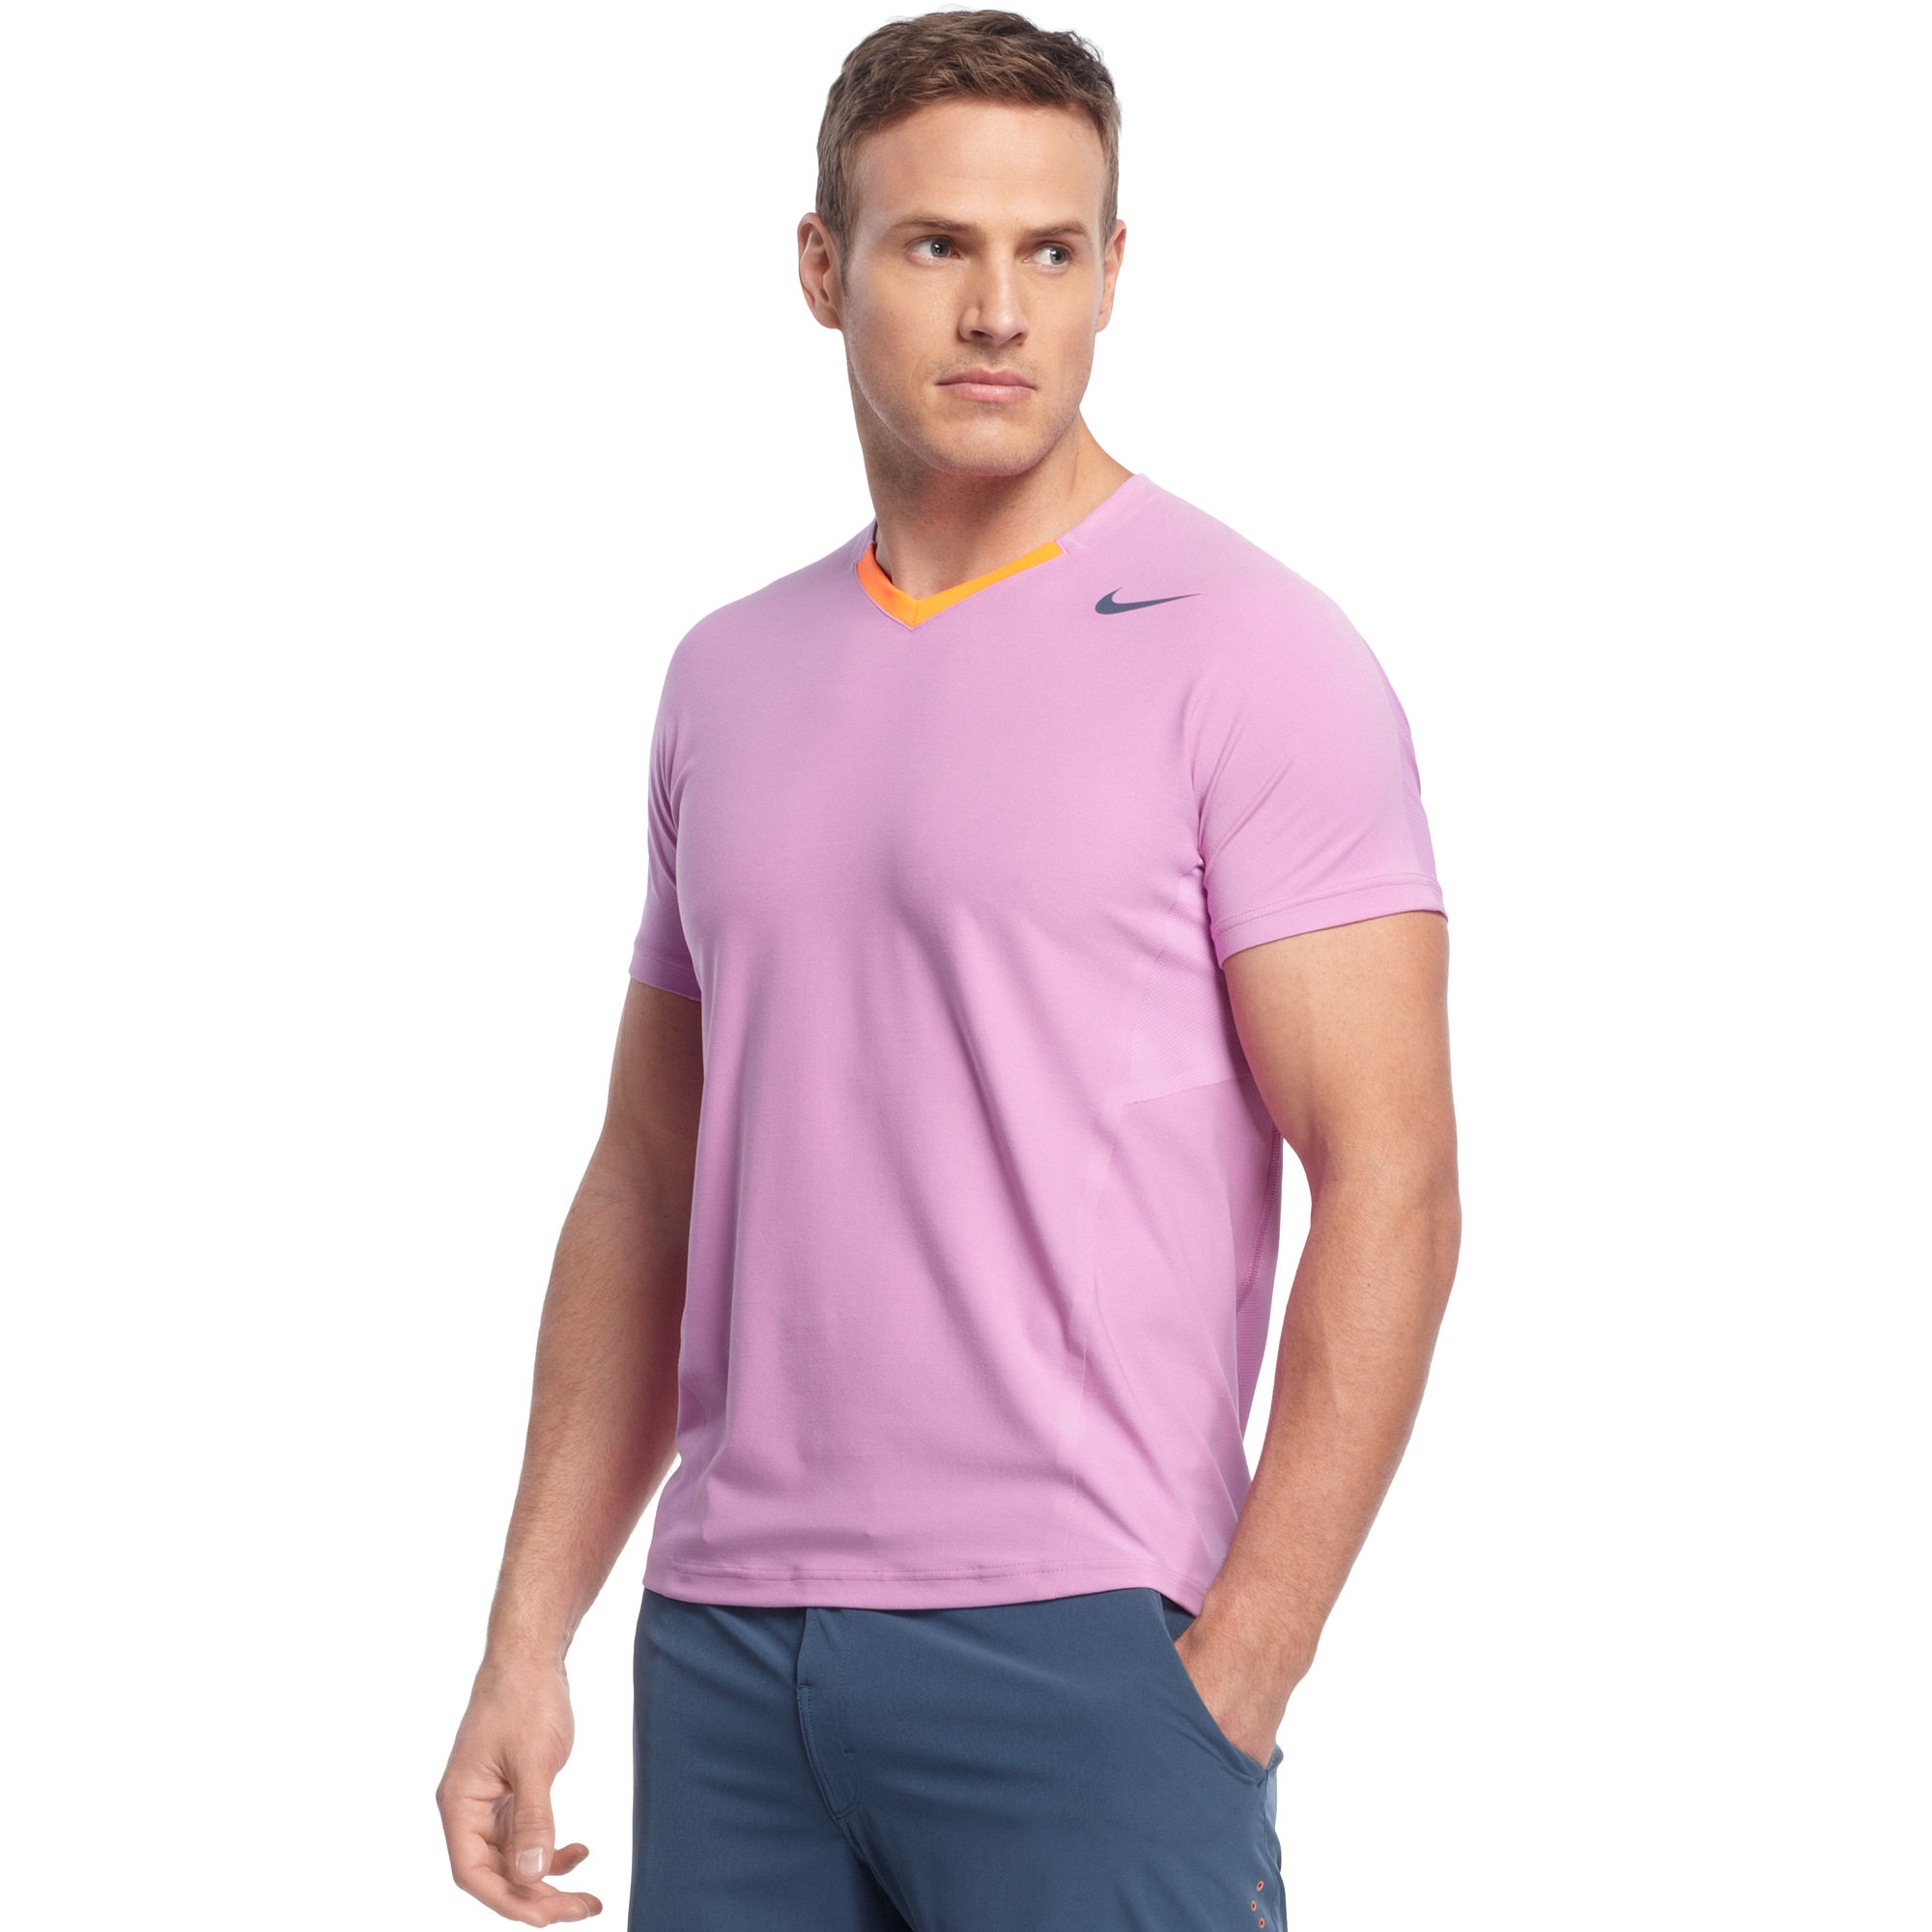 Nike Premier Rafael Nadal Crew Neck Tennis Tshirt in Purple for Men - Lyst